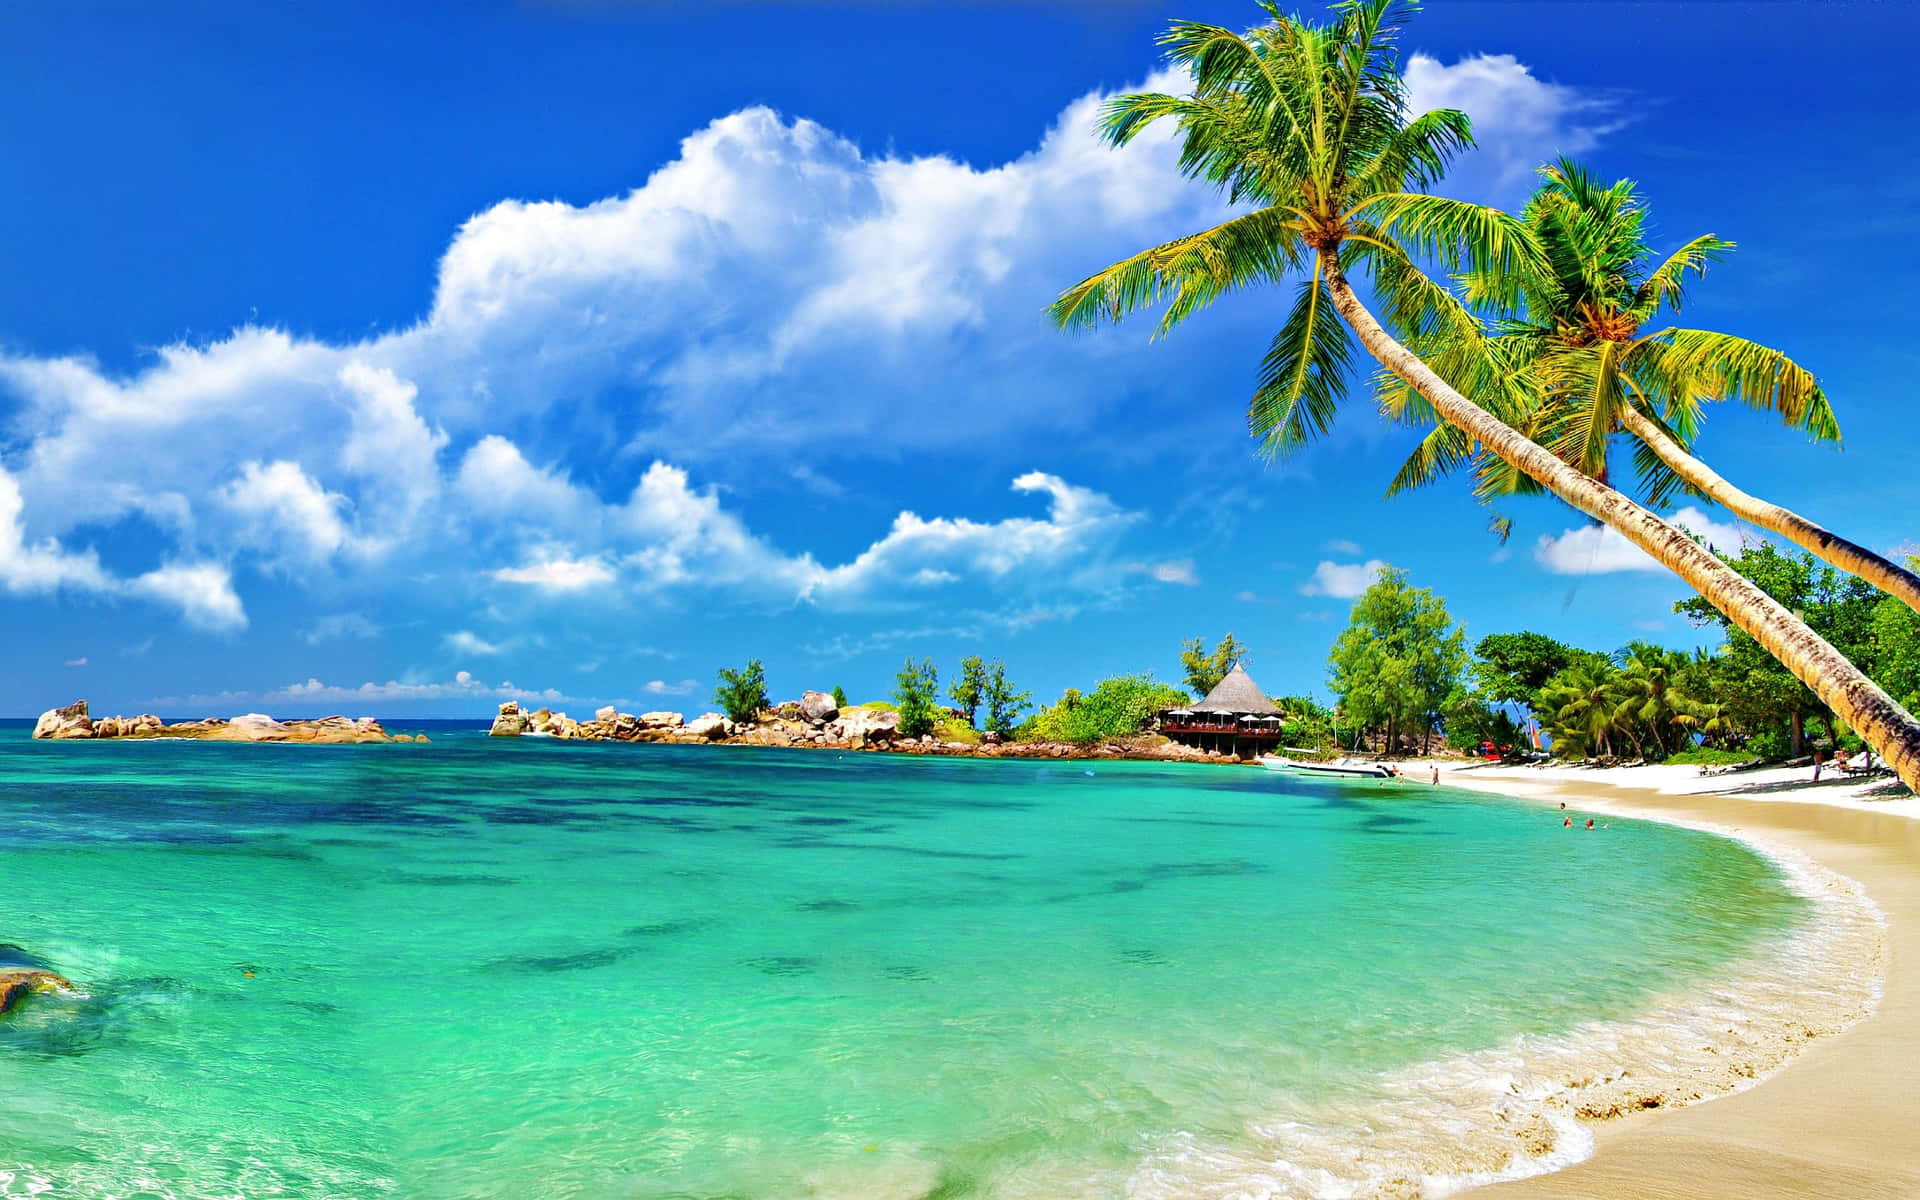 A Sandy Beach With Palm Trees